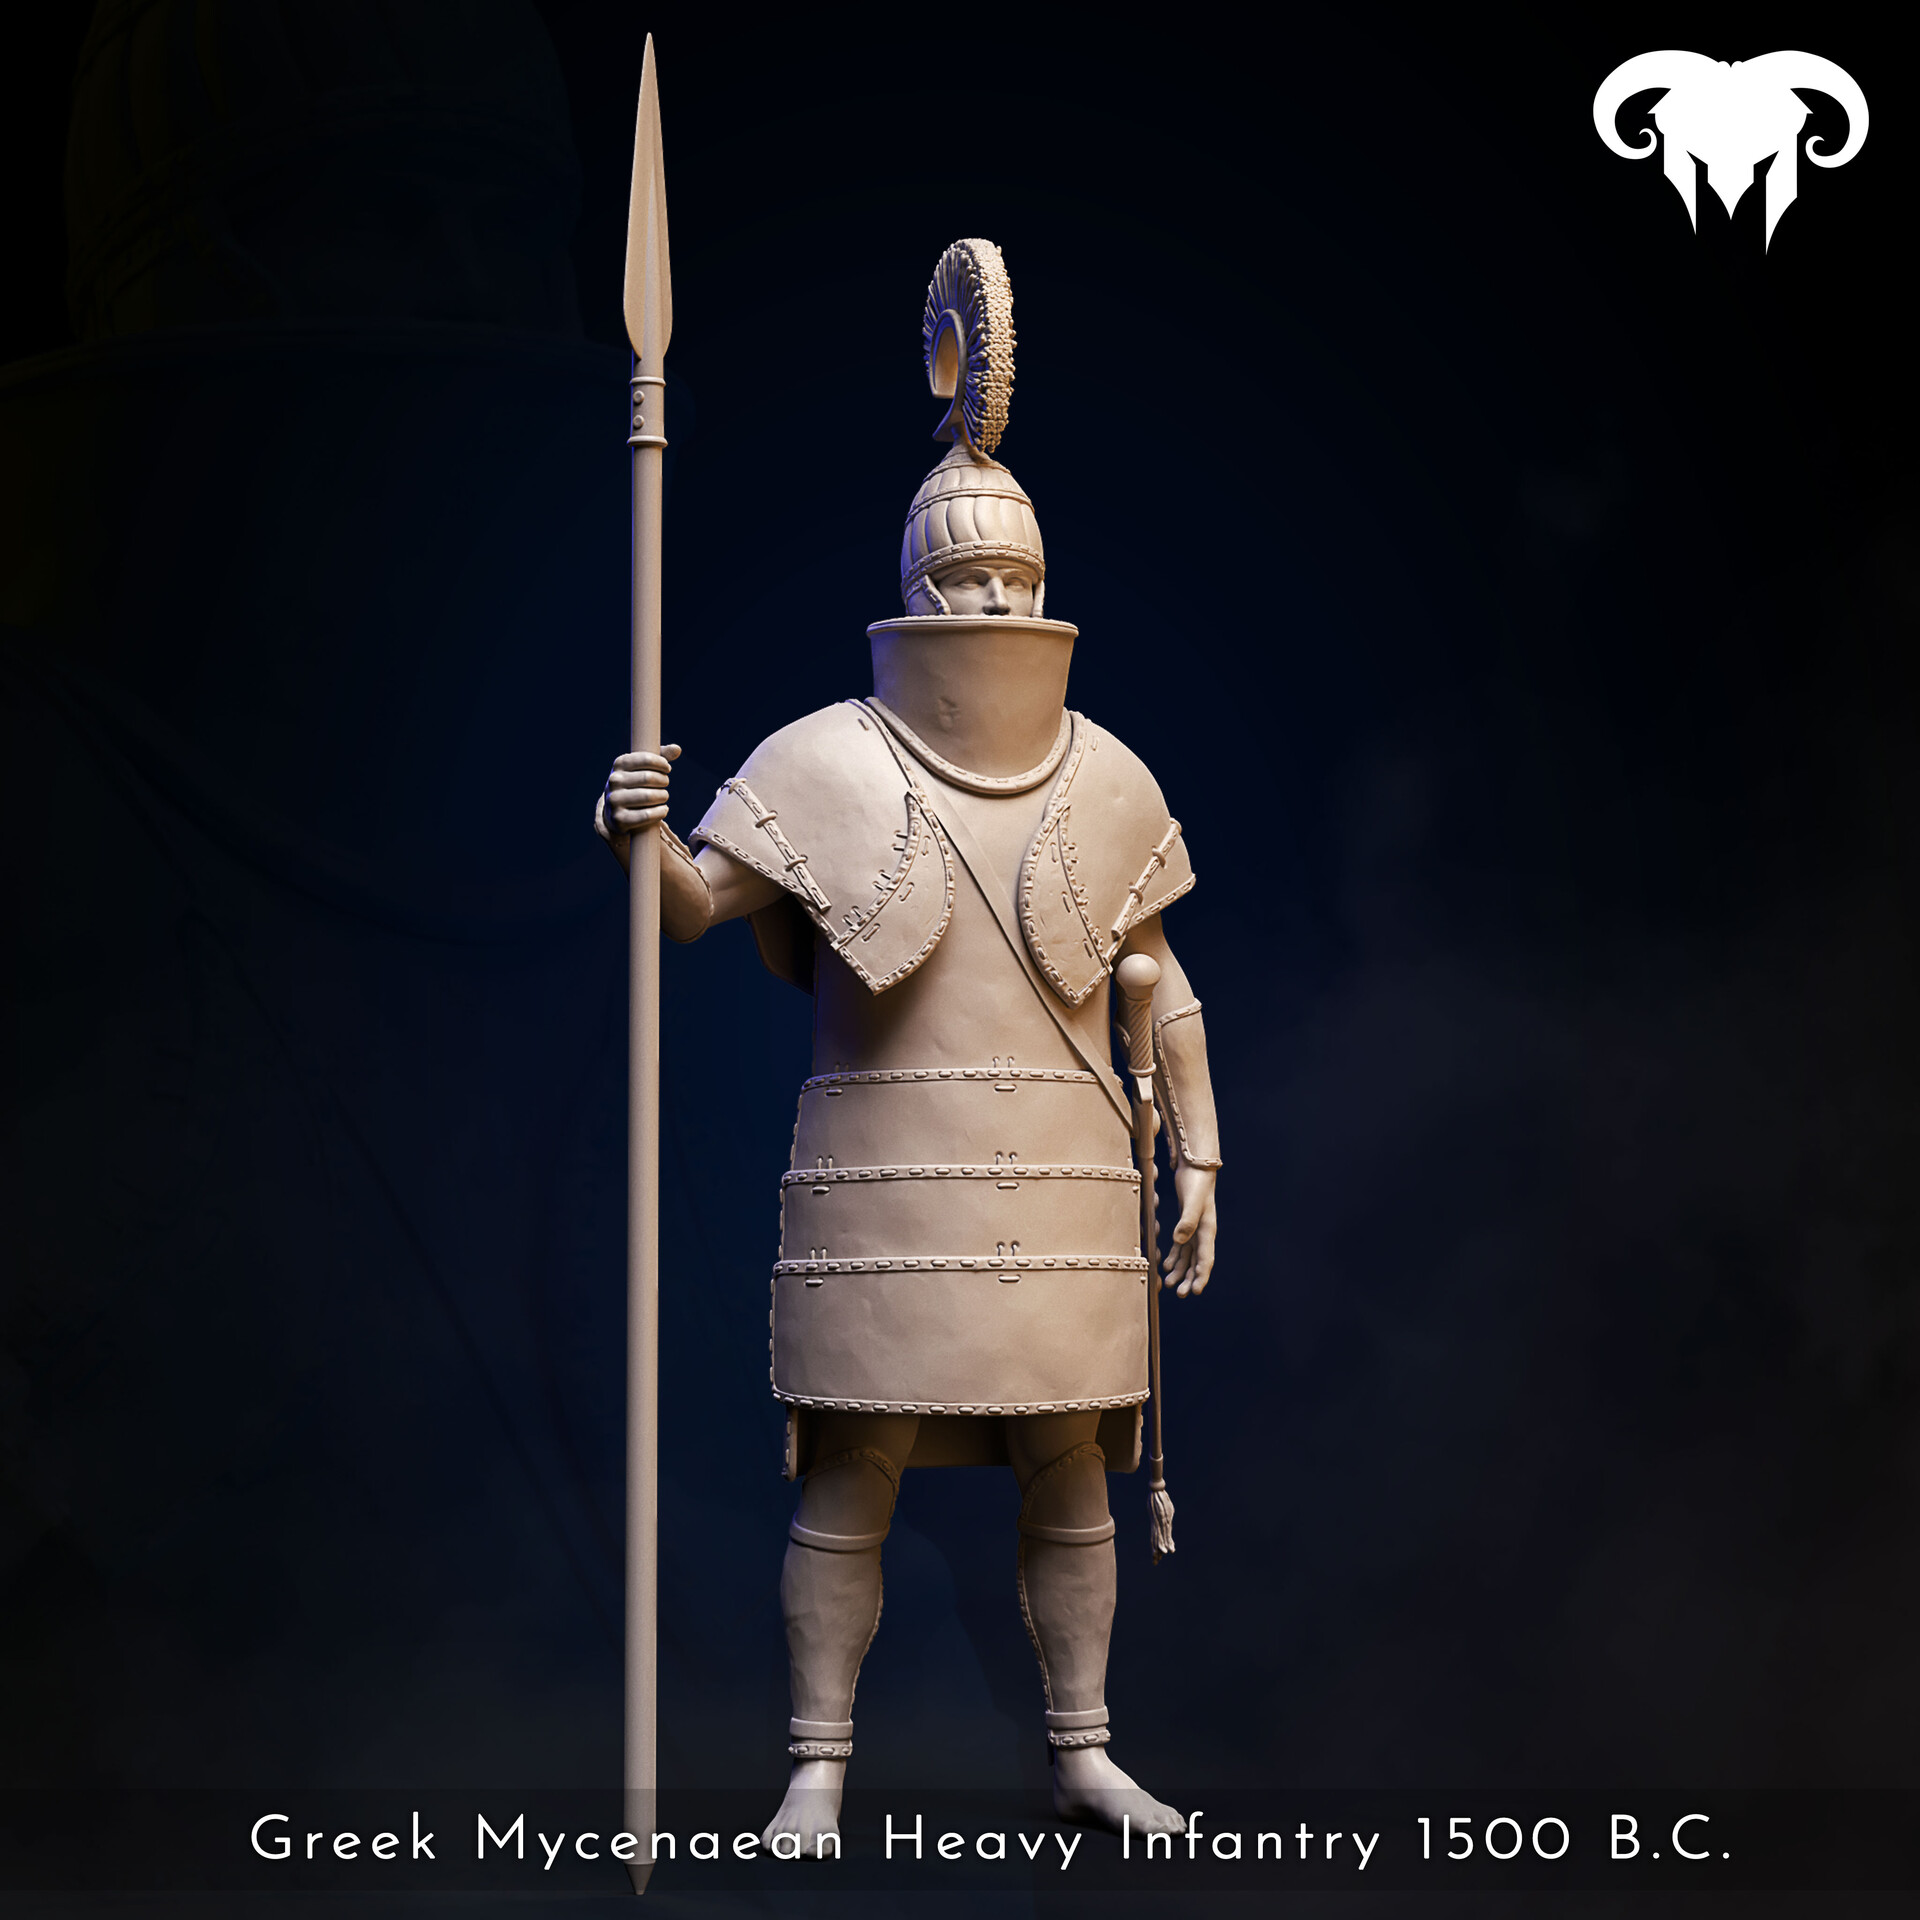 Greek Mycenaean Heavy Infantry 1500 B.C. Palace Guard!